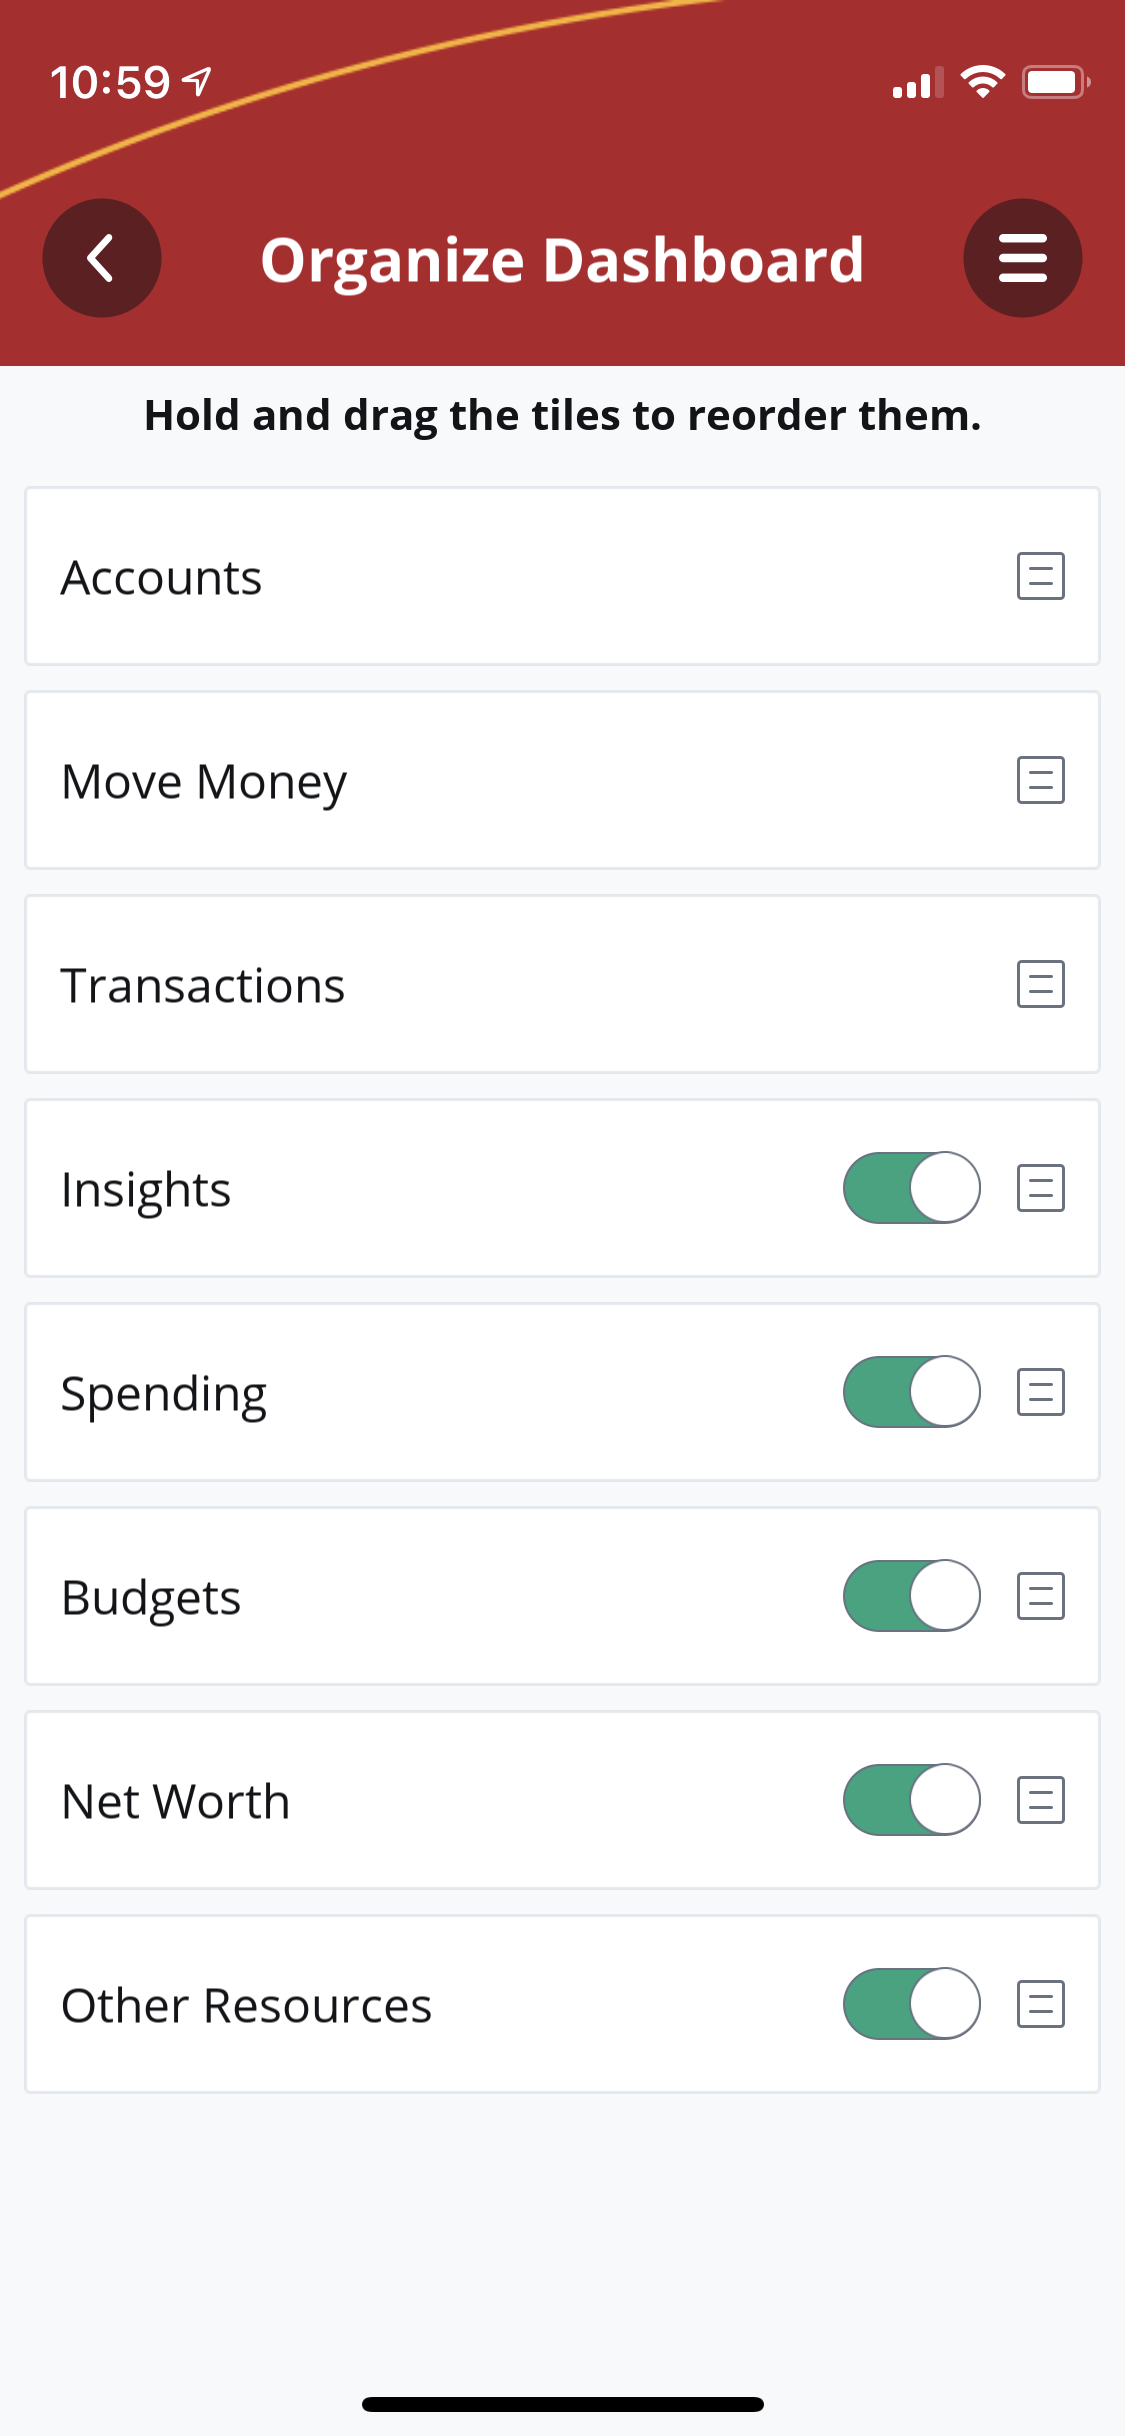 Screen shot showing organize dashboard